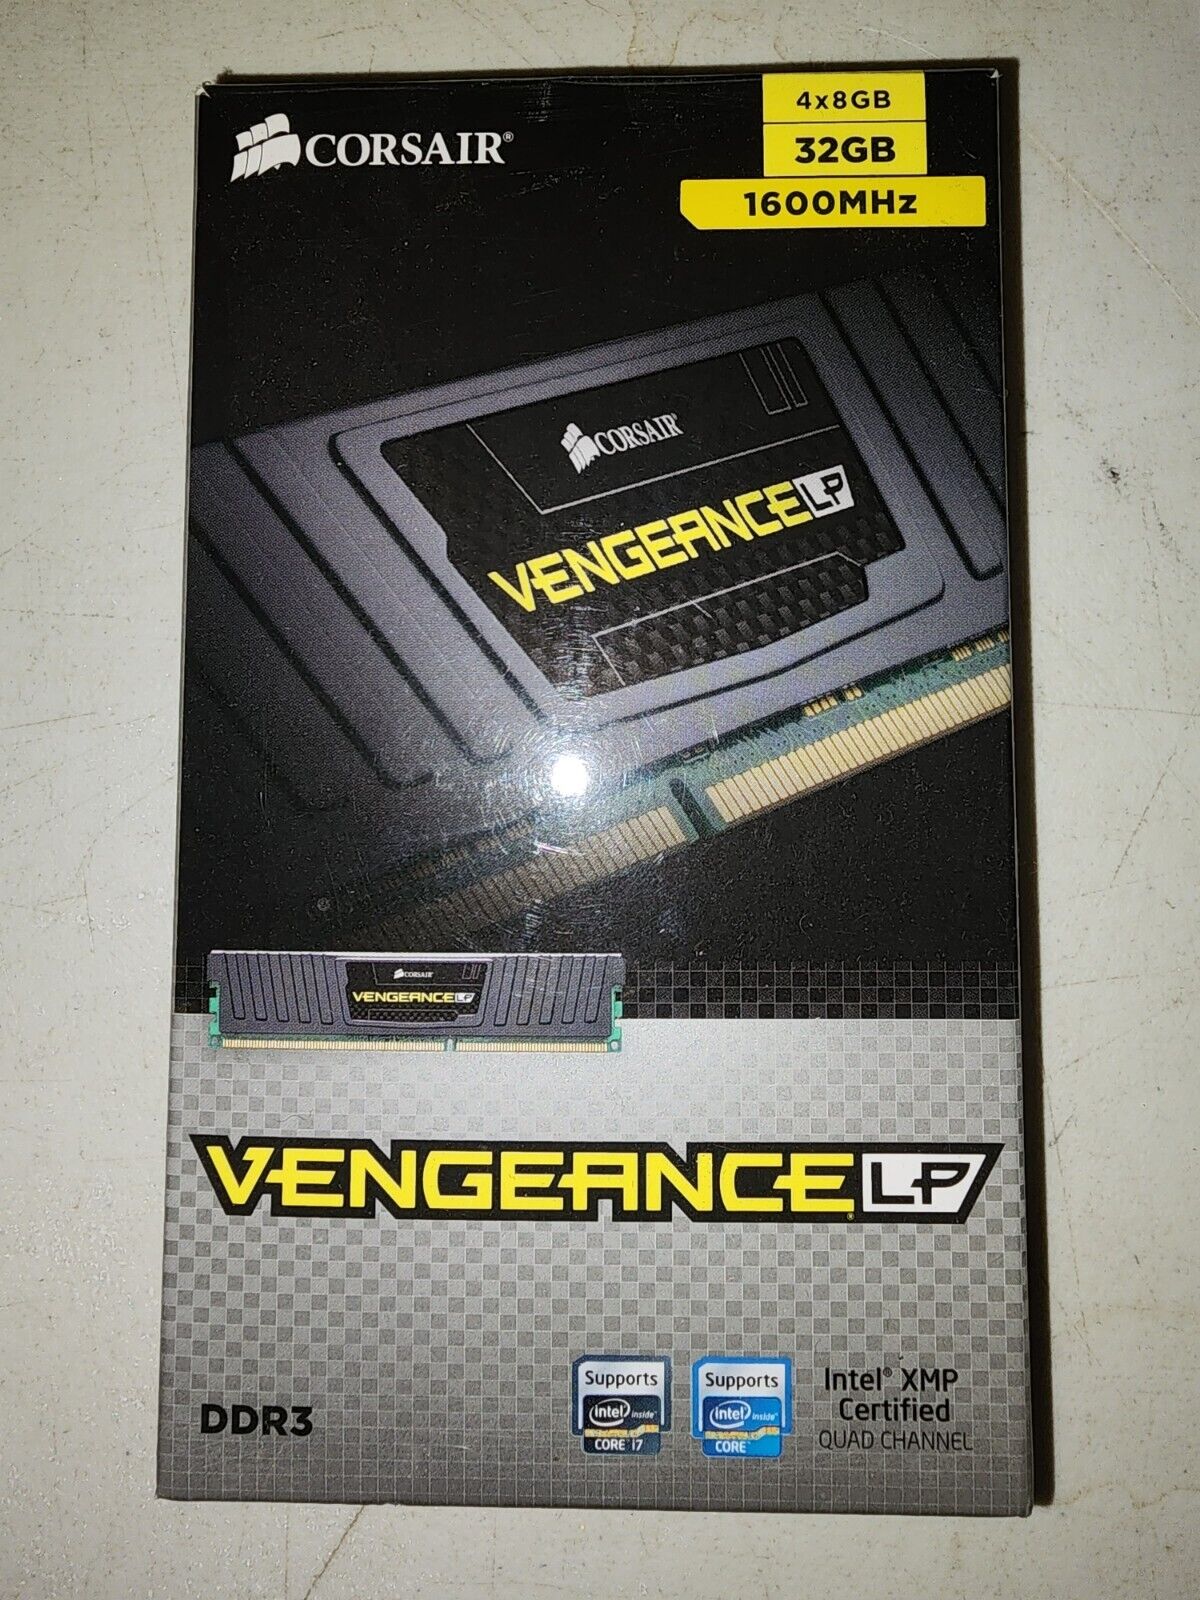 Computer Memory - Corsair Vengeance LP 32GB 4x8GB DDR3 1600 MHZ PC3 12800